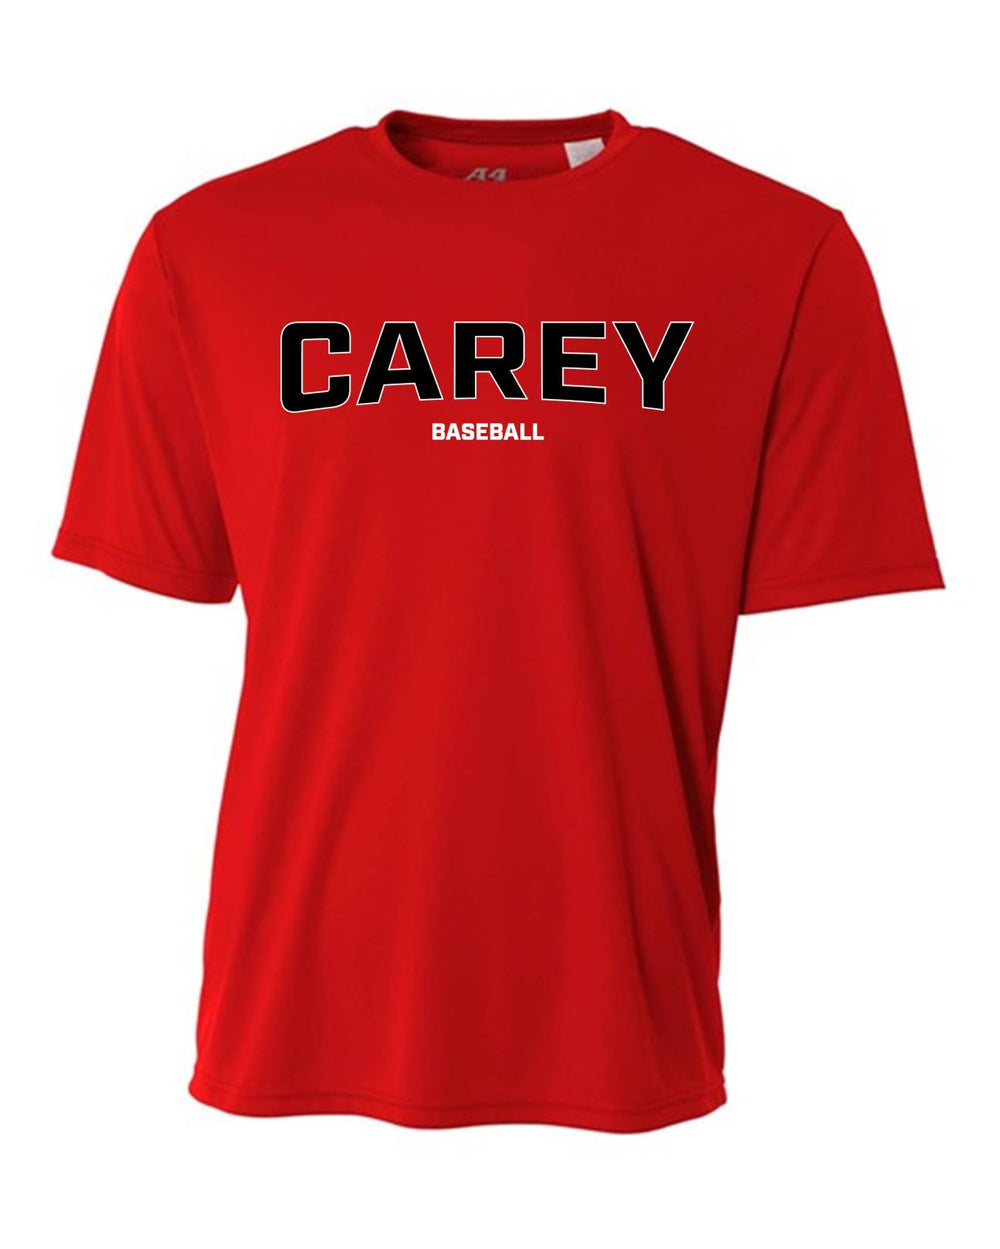 WCU Baseball Men's Short-Sleeve Performance Shirt WCU Baseball Red CAREY - Third Coast Soccer